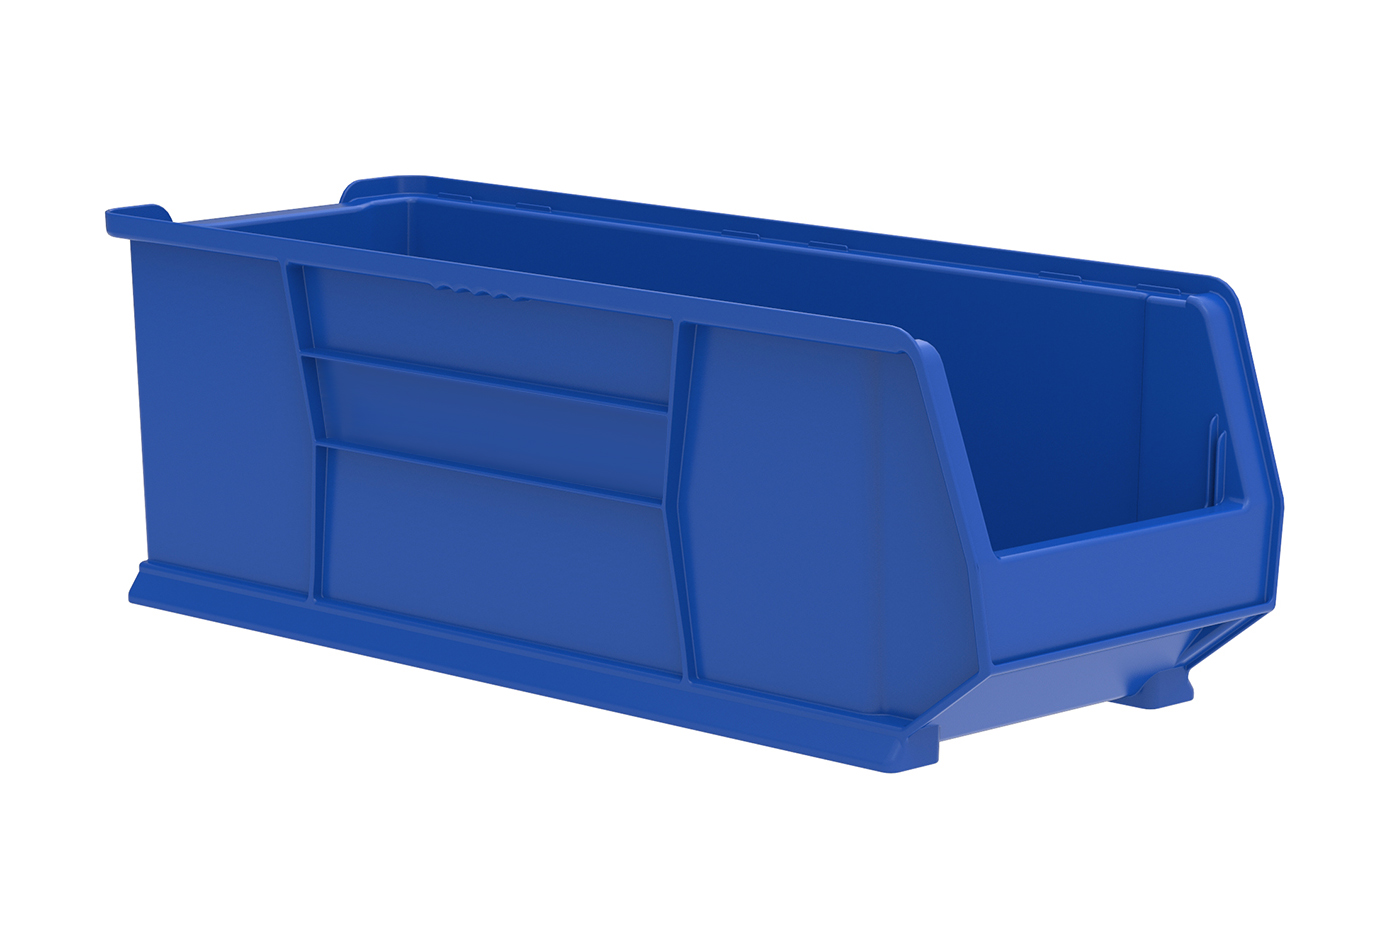 30 x 11 x 10 - Plastic Storage Bin | Reusable Transport Packaging